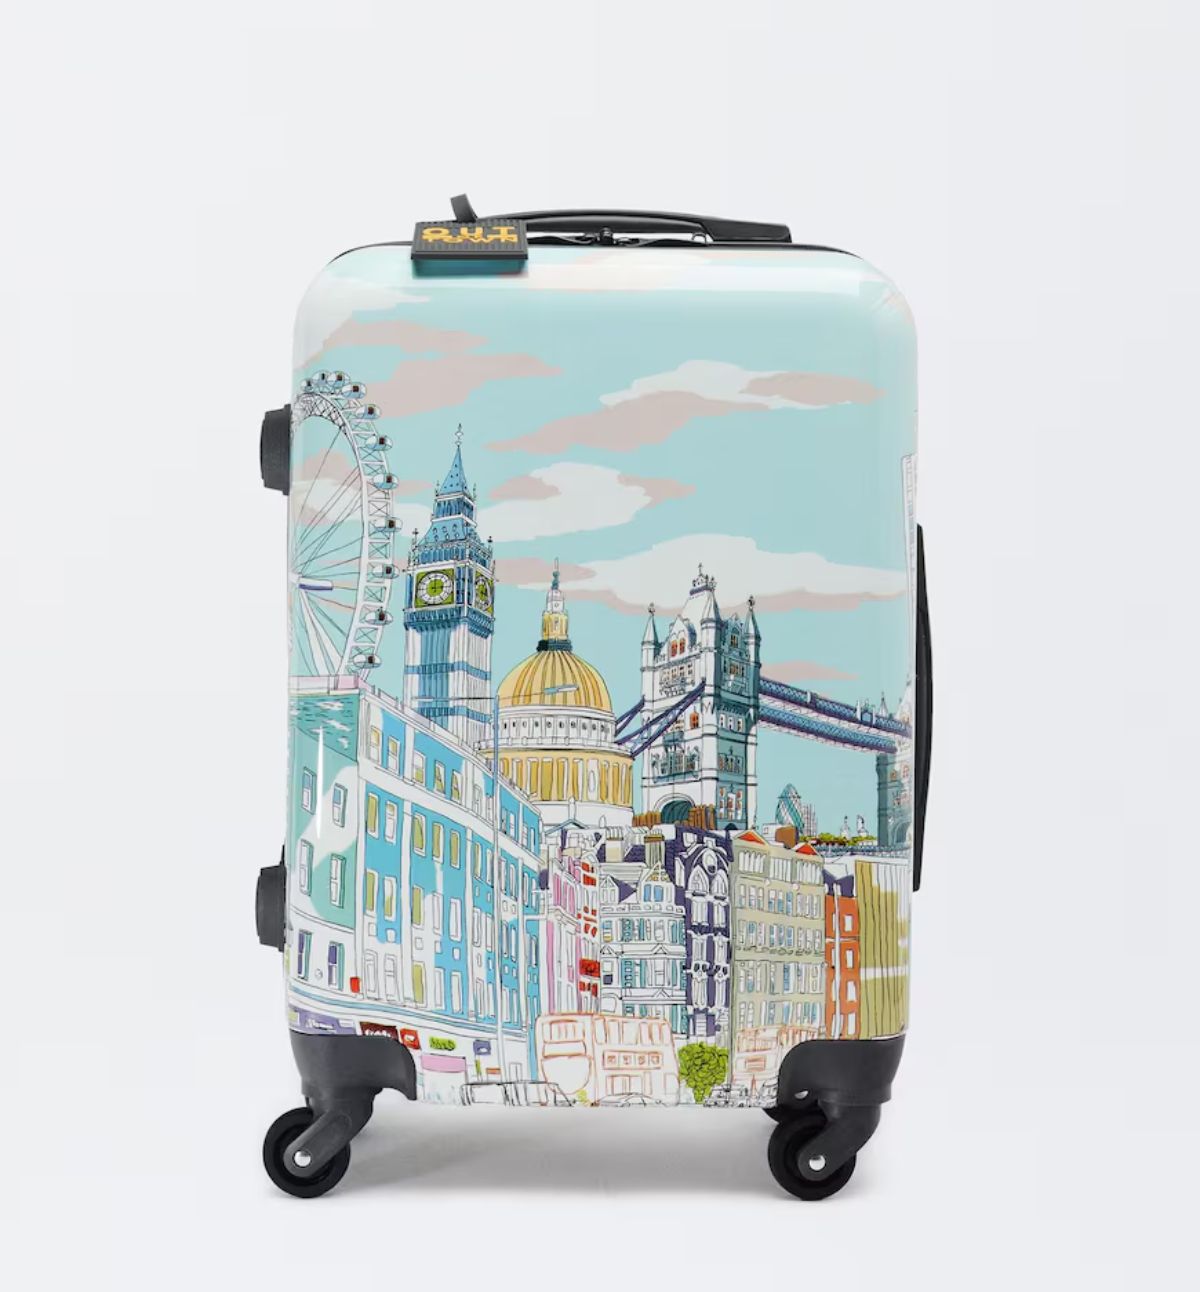 Con esta maleta de Parfois serás la envidia de cualquier aeropuerto.